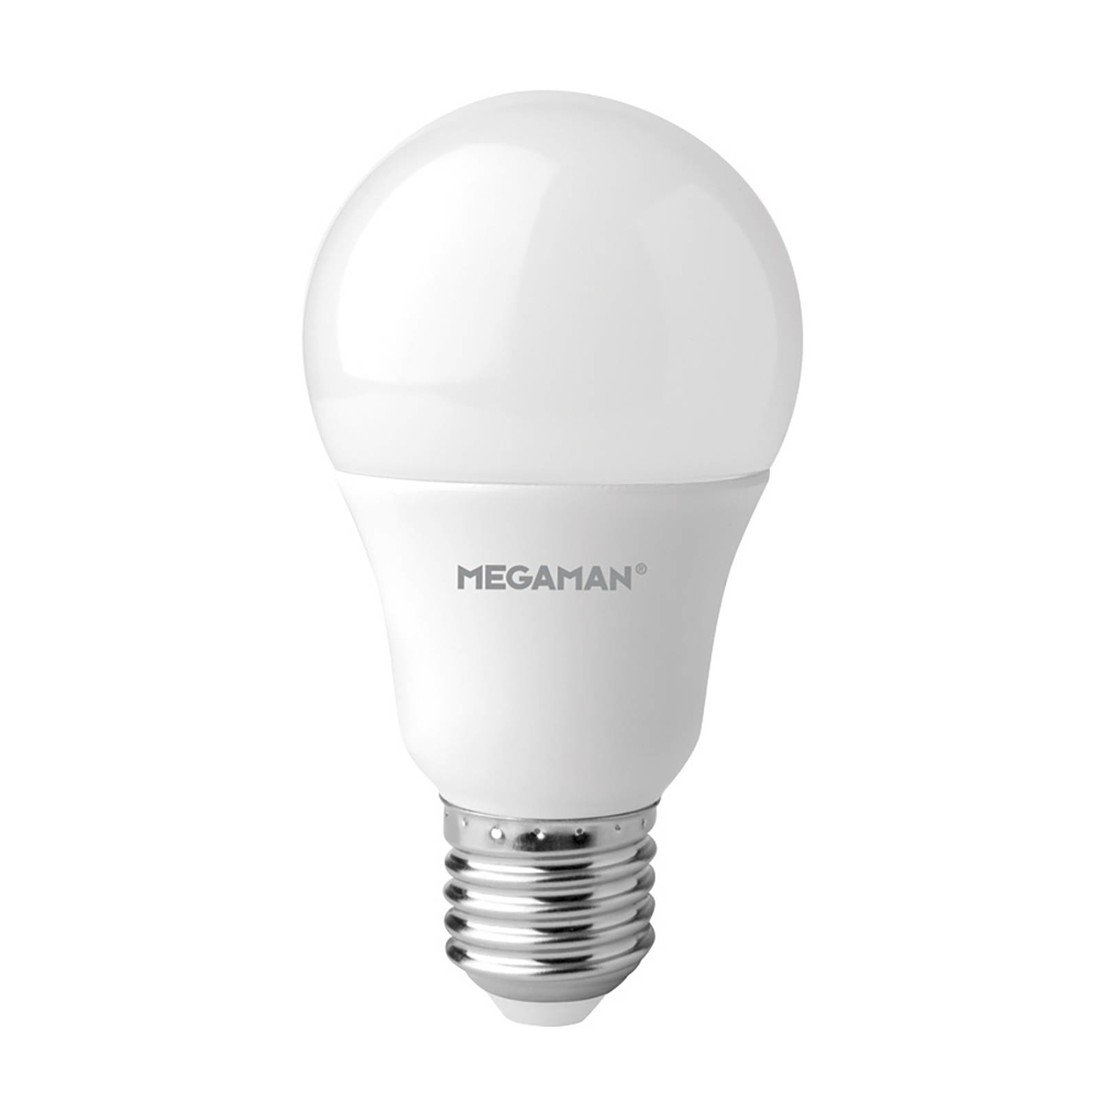 Megaman MEGAMAN E27 7W LED žárovka A60 810 lm 2 700K opál, plast, E27, 7W, Energetická třída: E, P: 10.9 cm